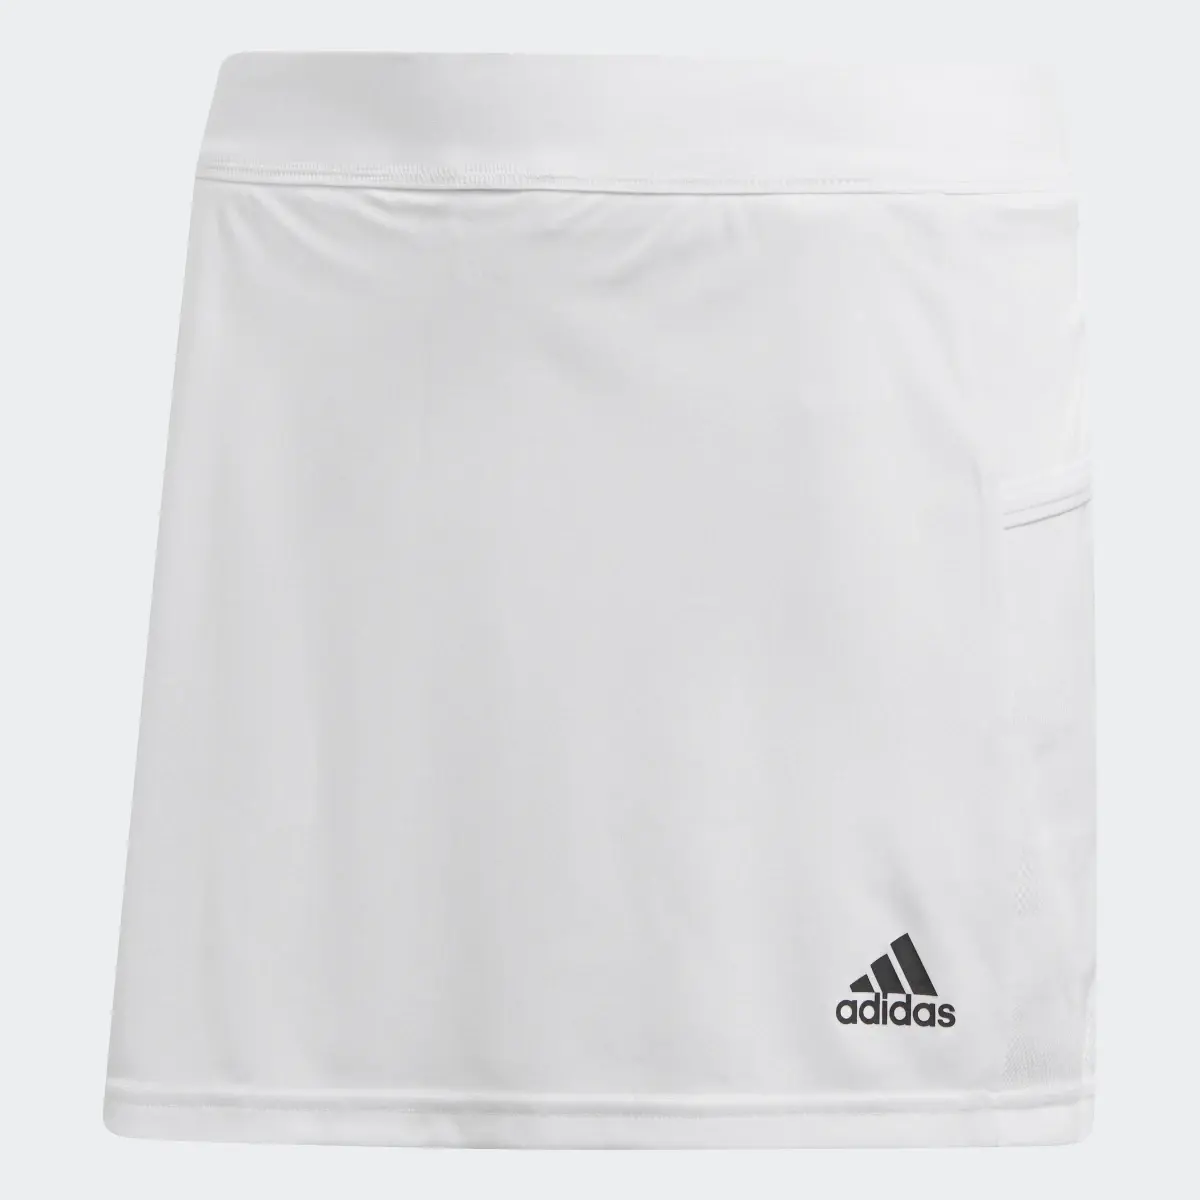 Adidas Team 19 Skirt. 1